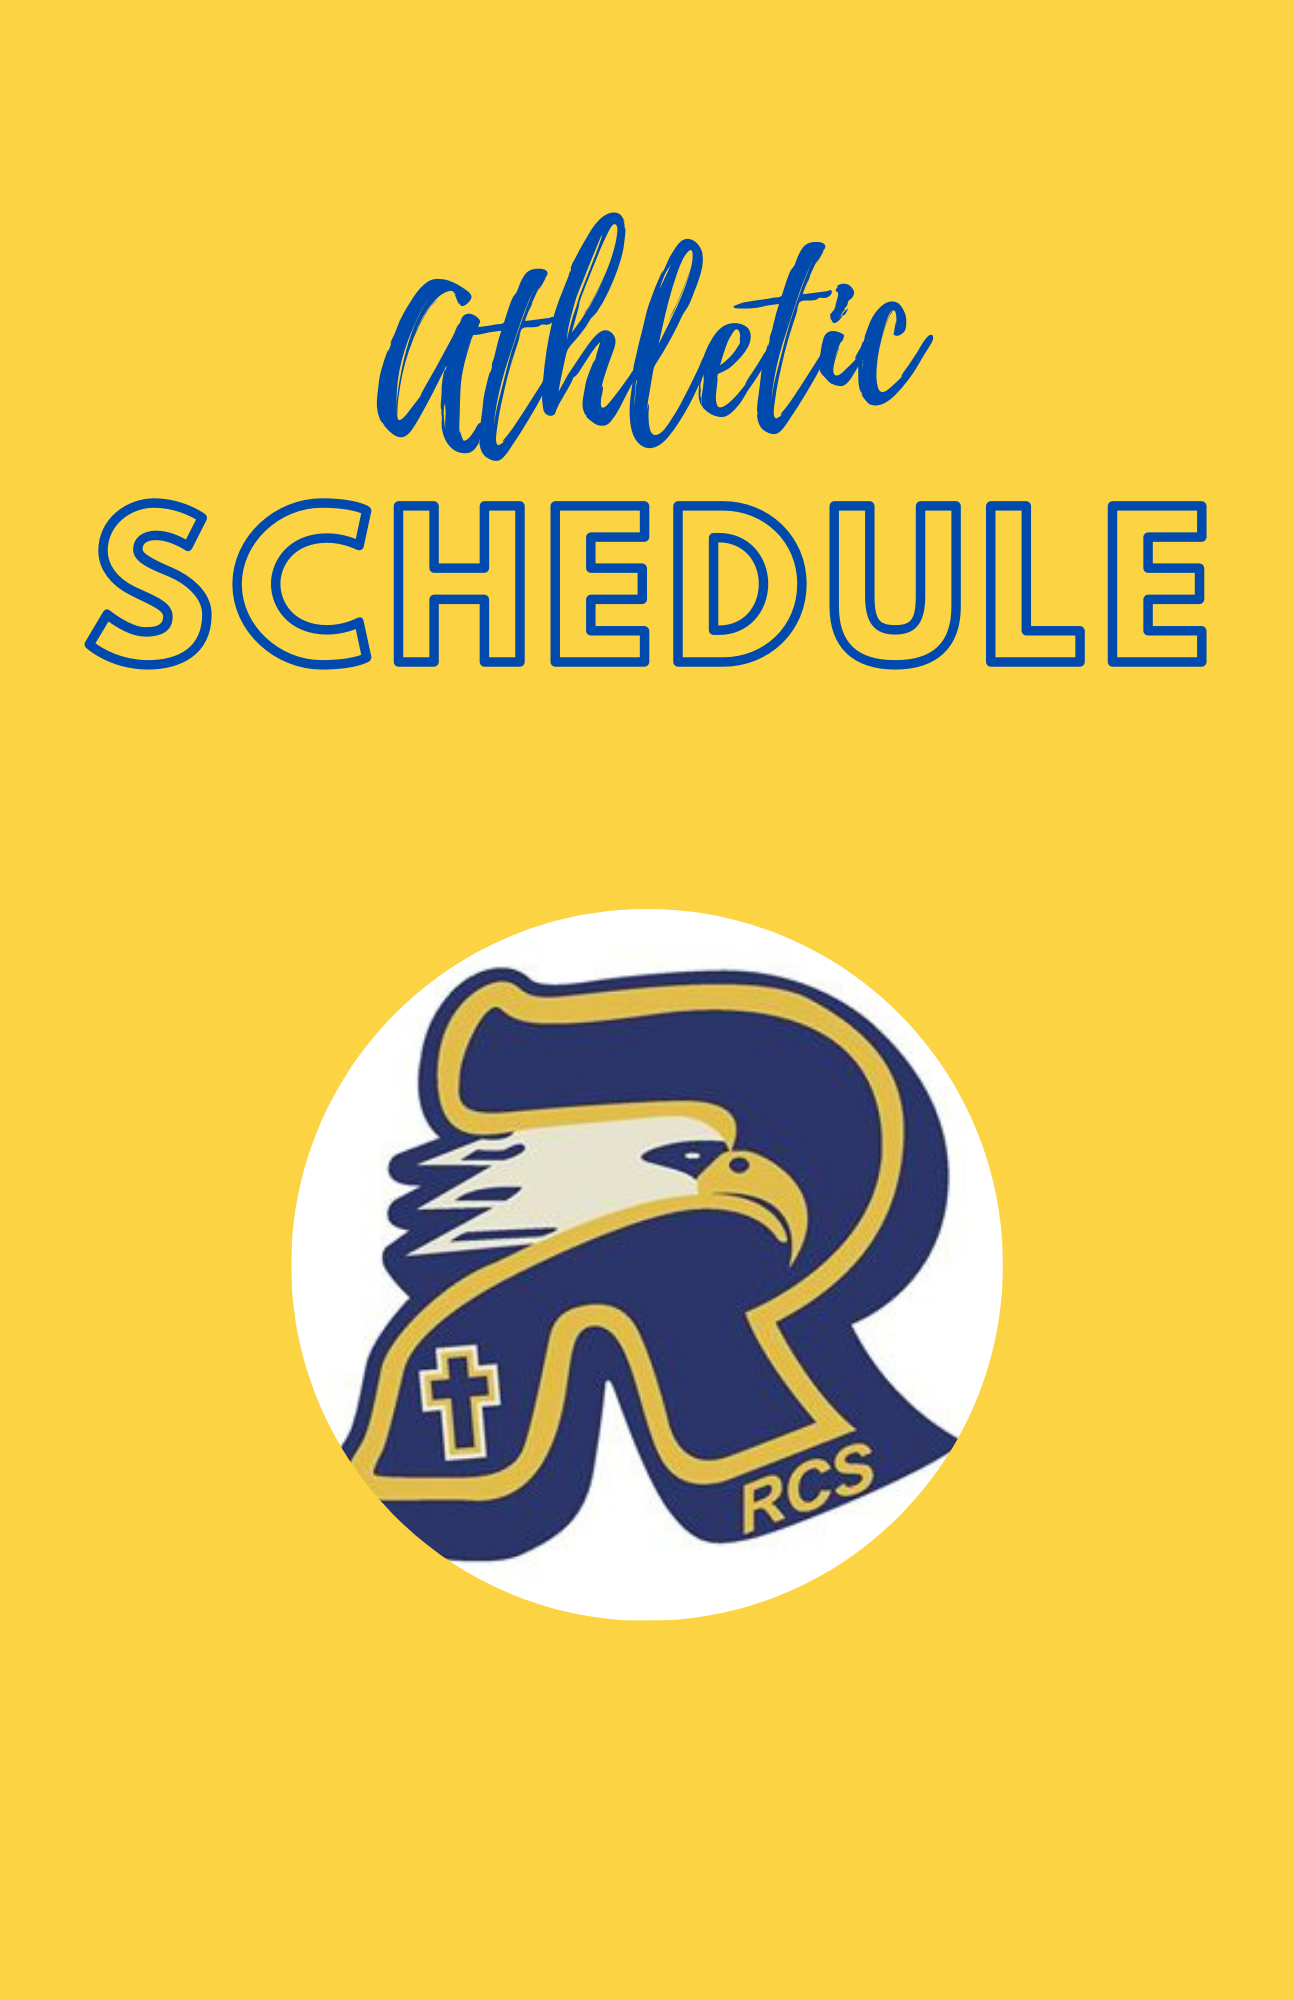 RCS Athletic Schedule Resurrection Catholic School